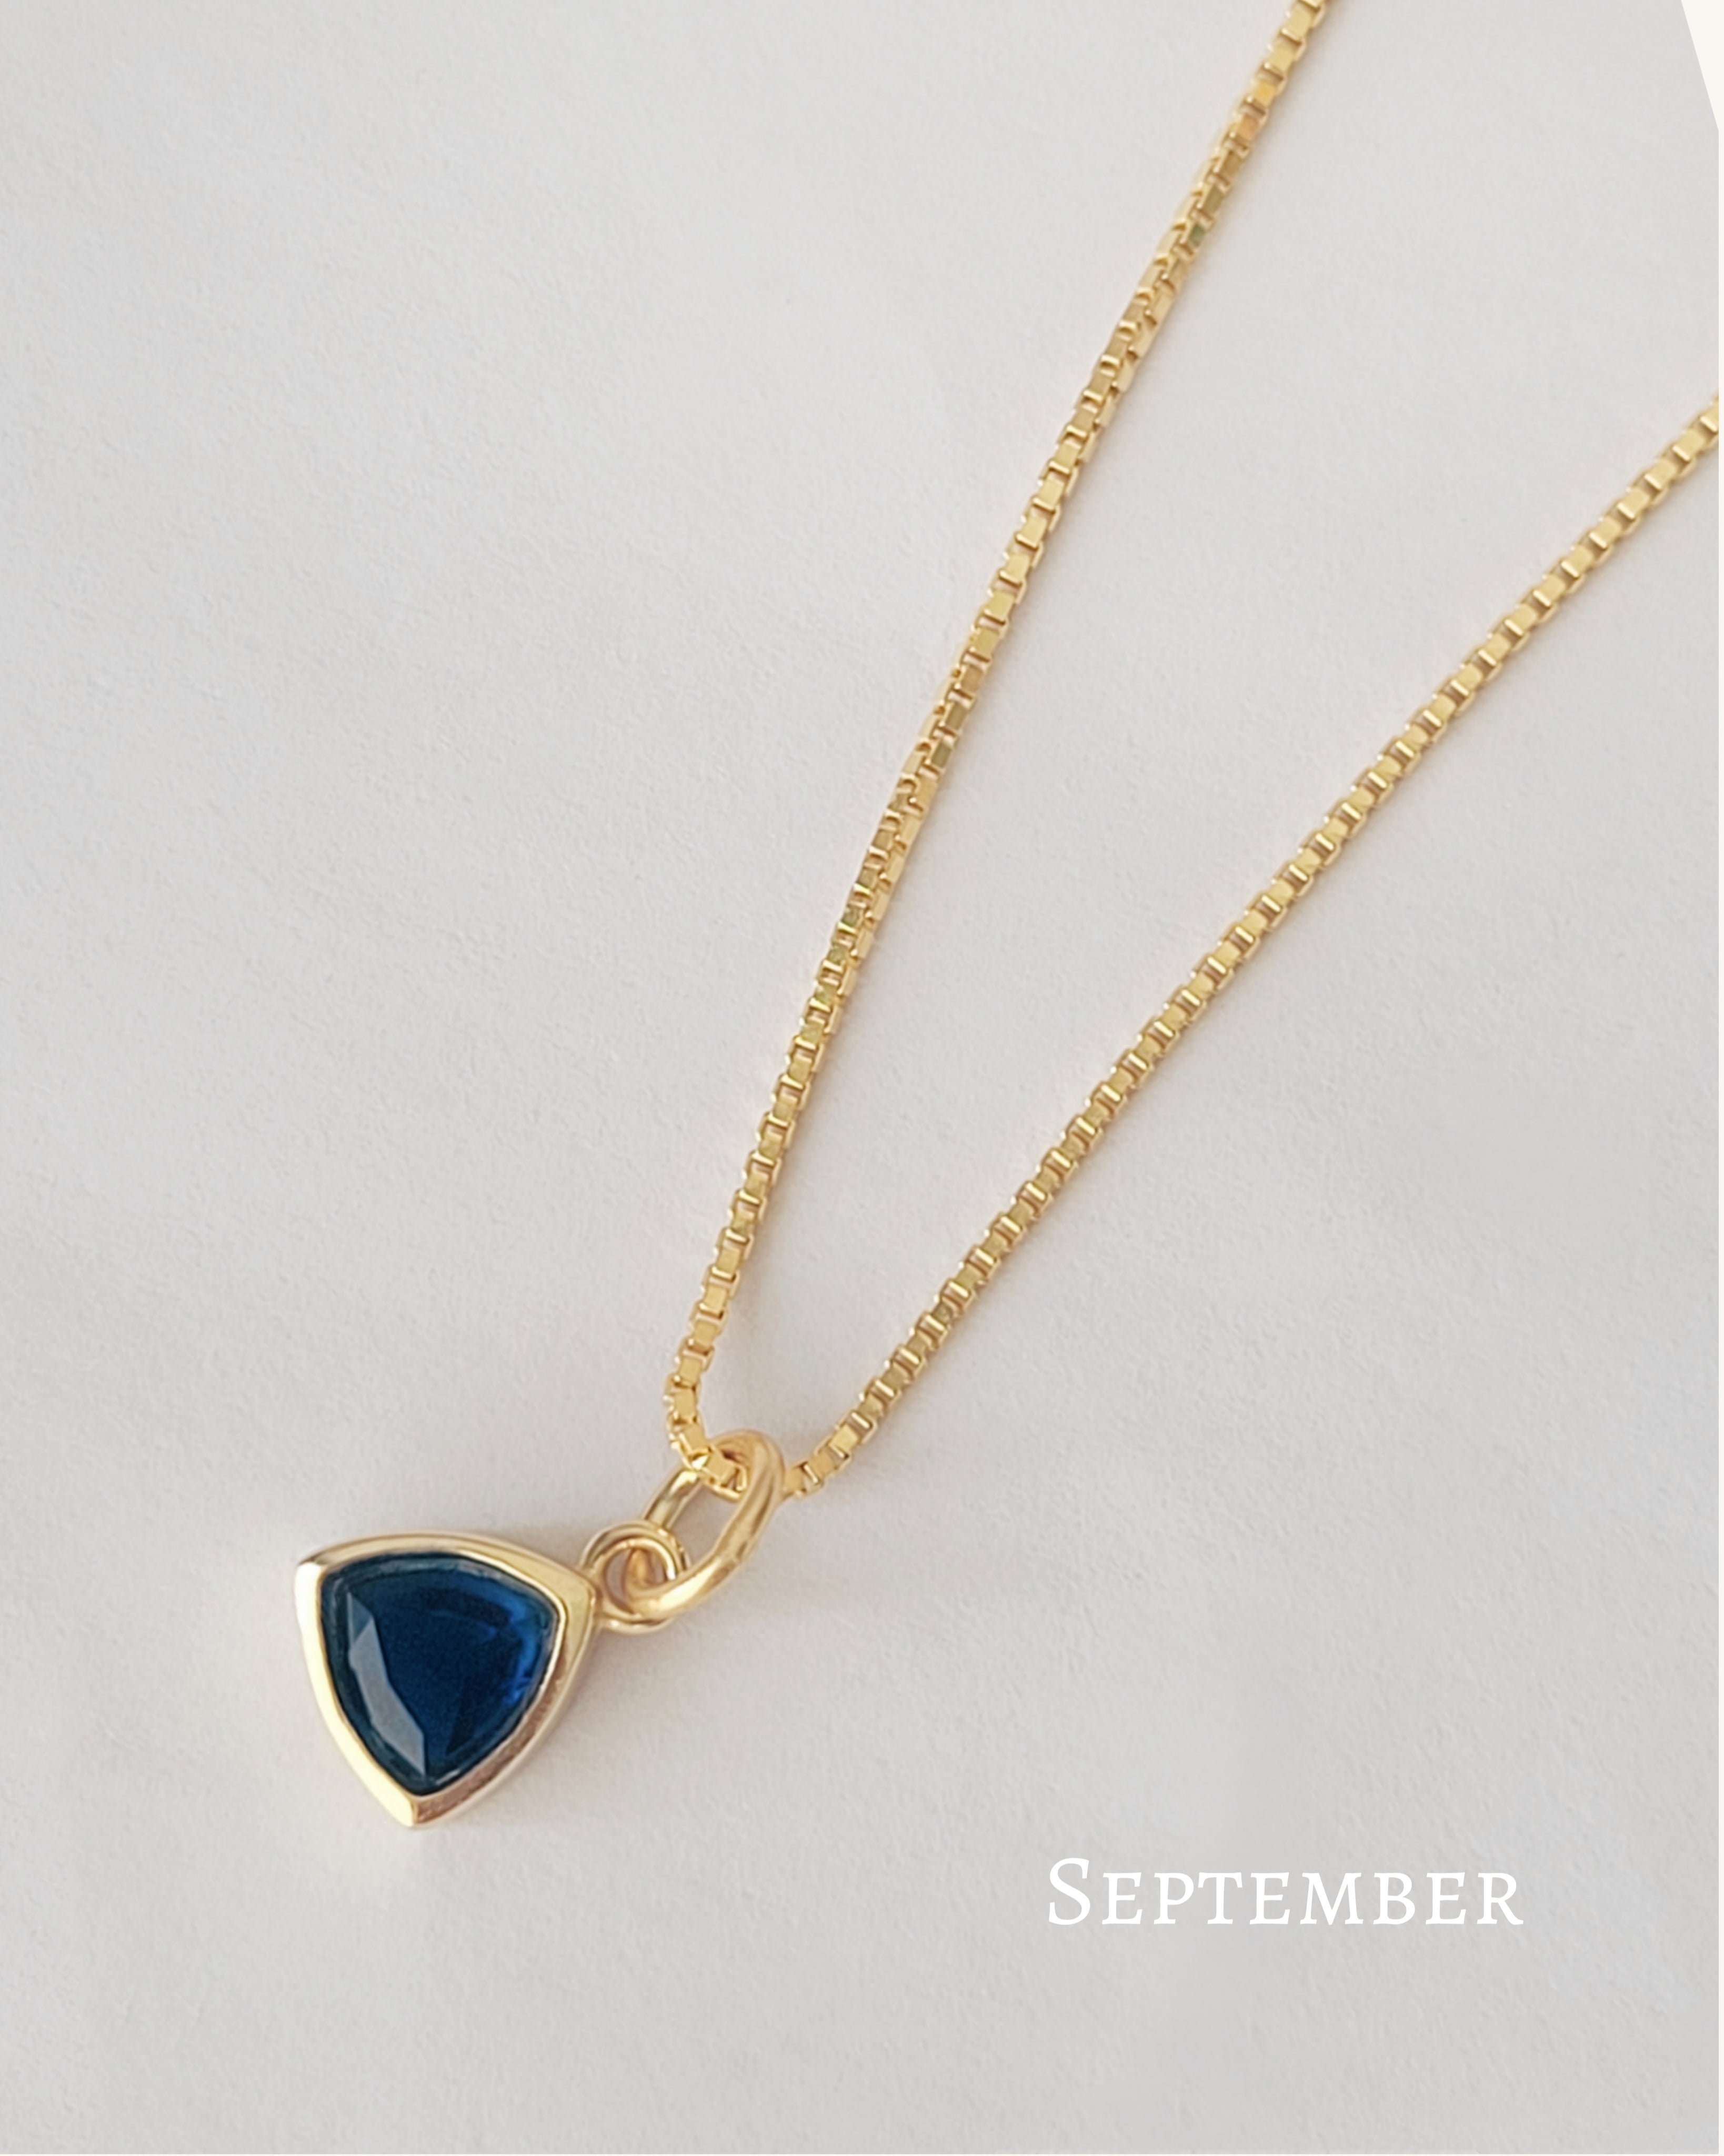 September birthstone necklace 